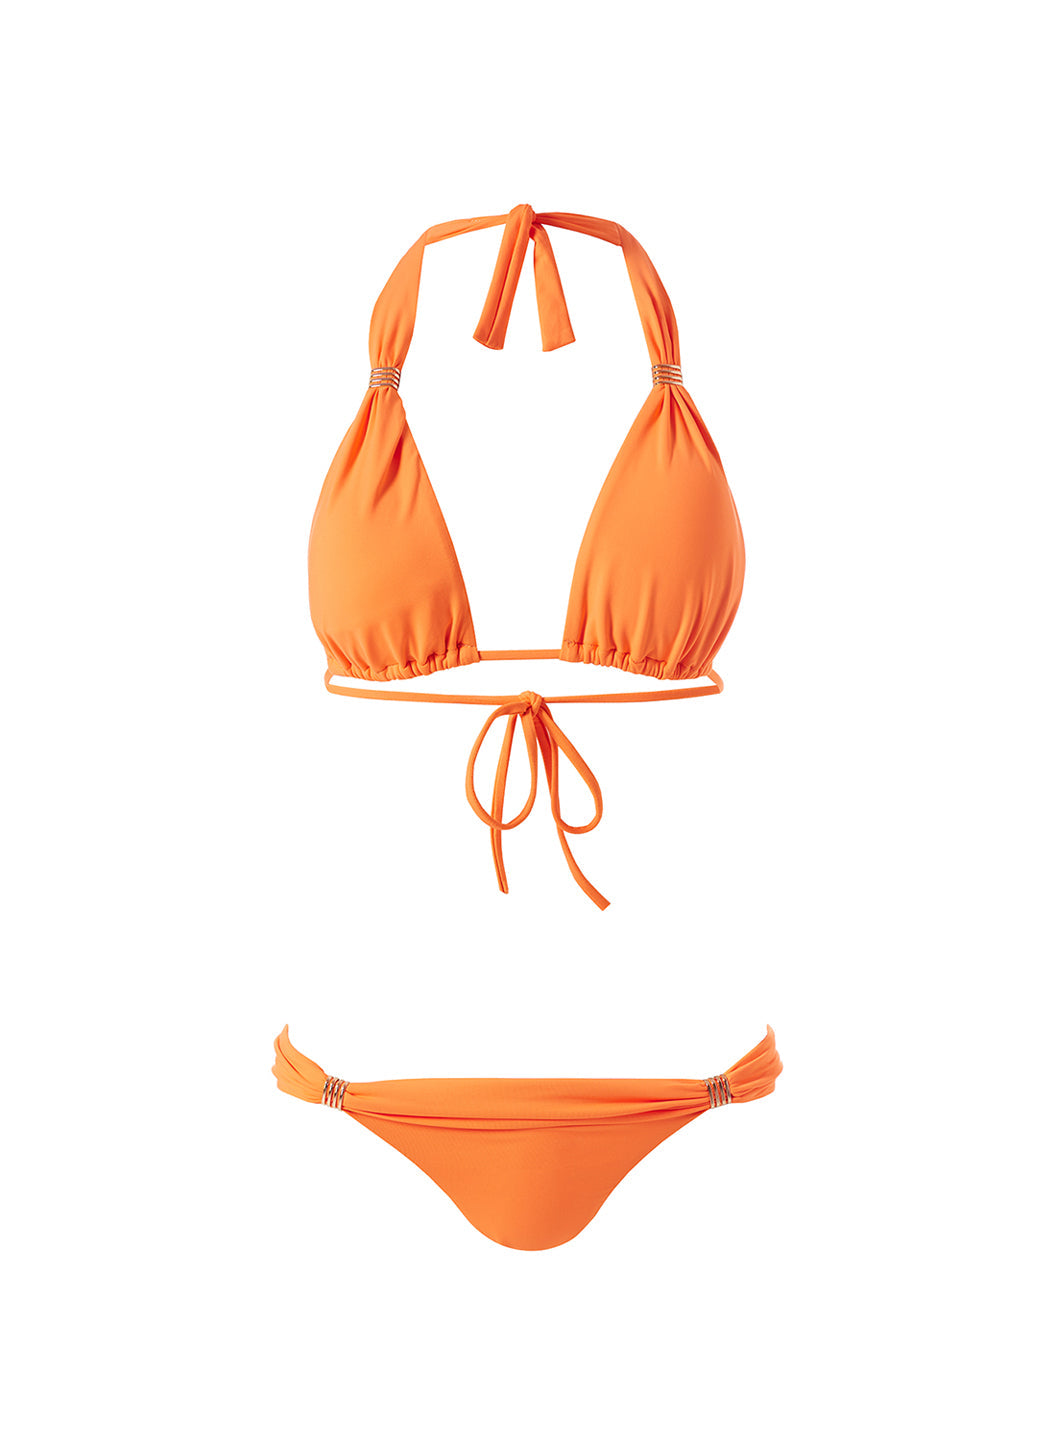 Exclusive Grenada Orange Bikini